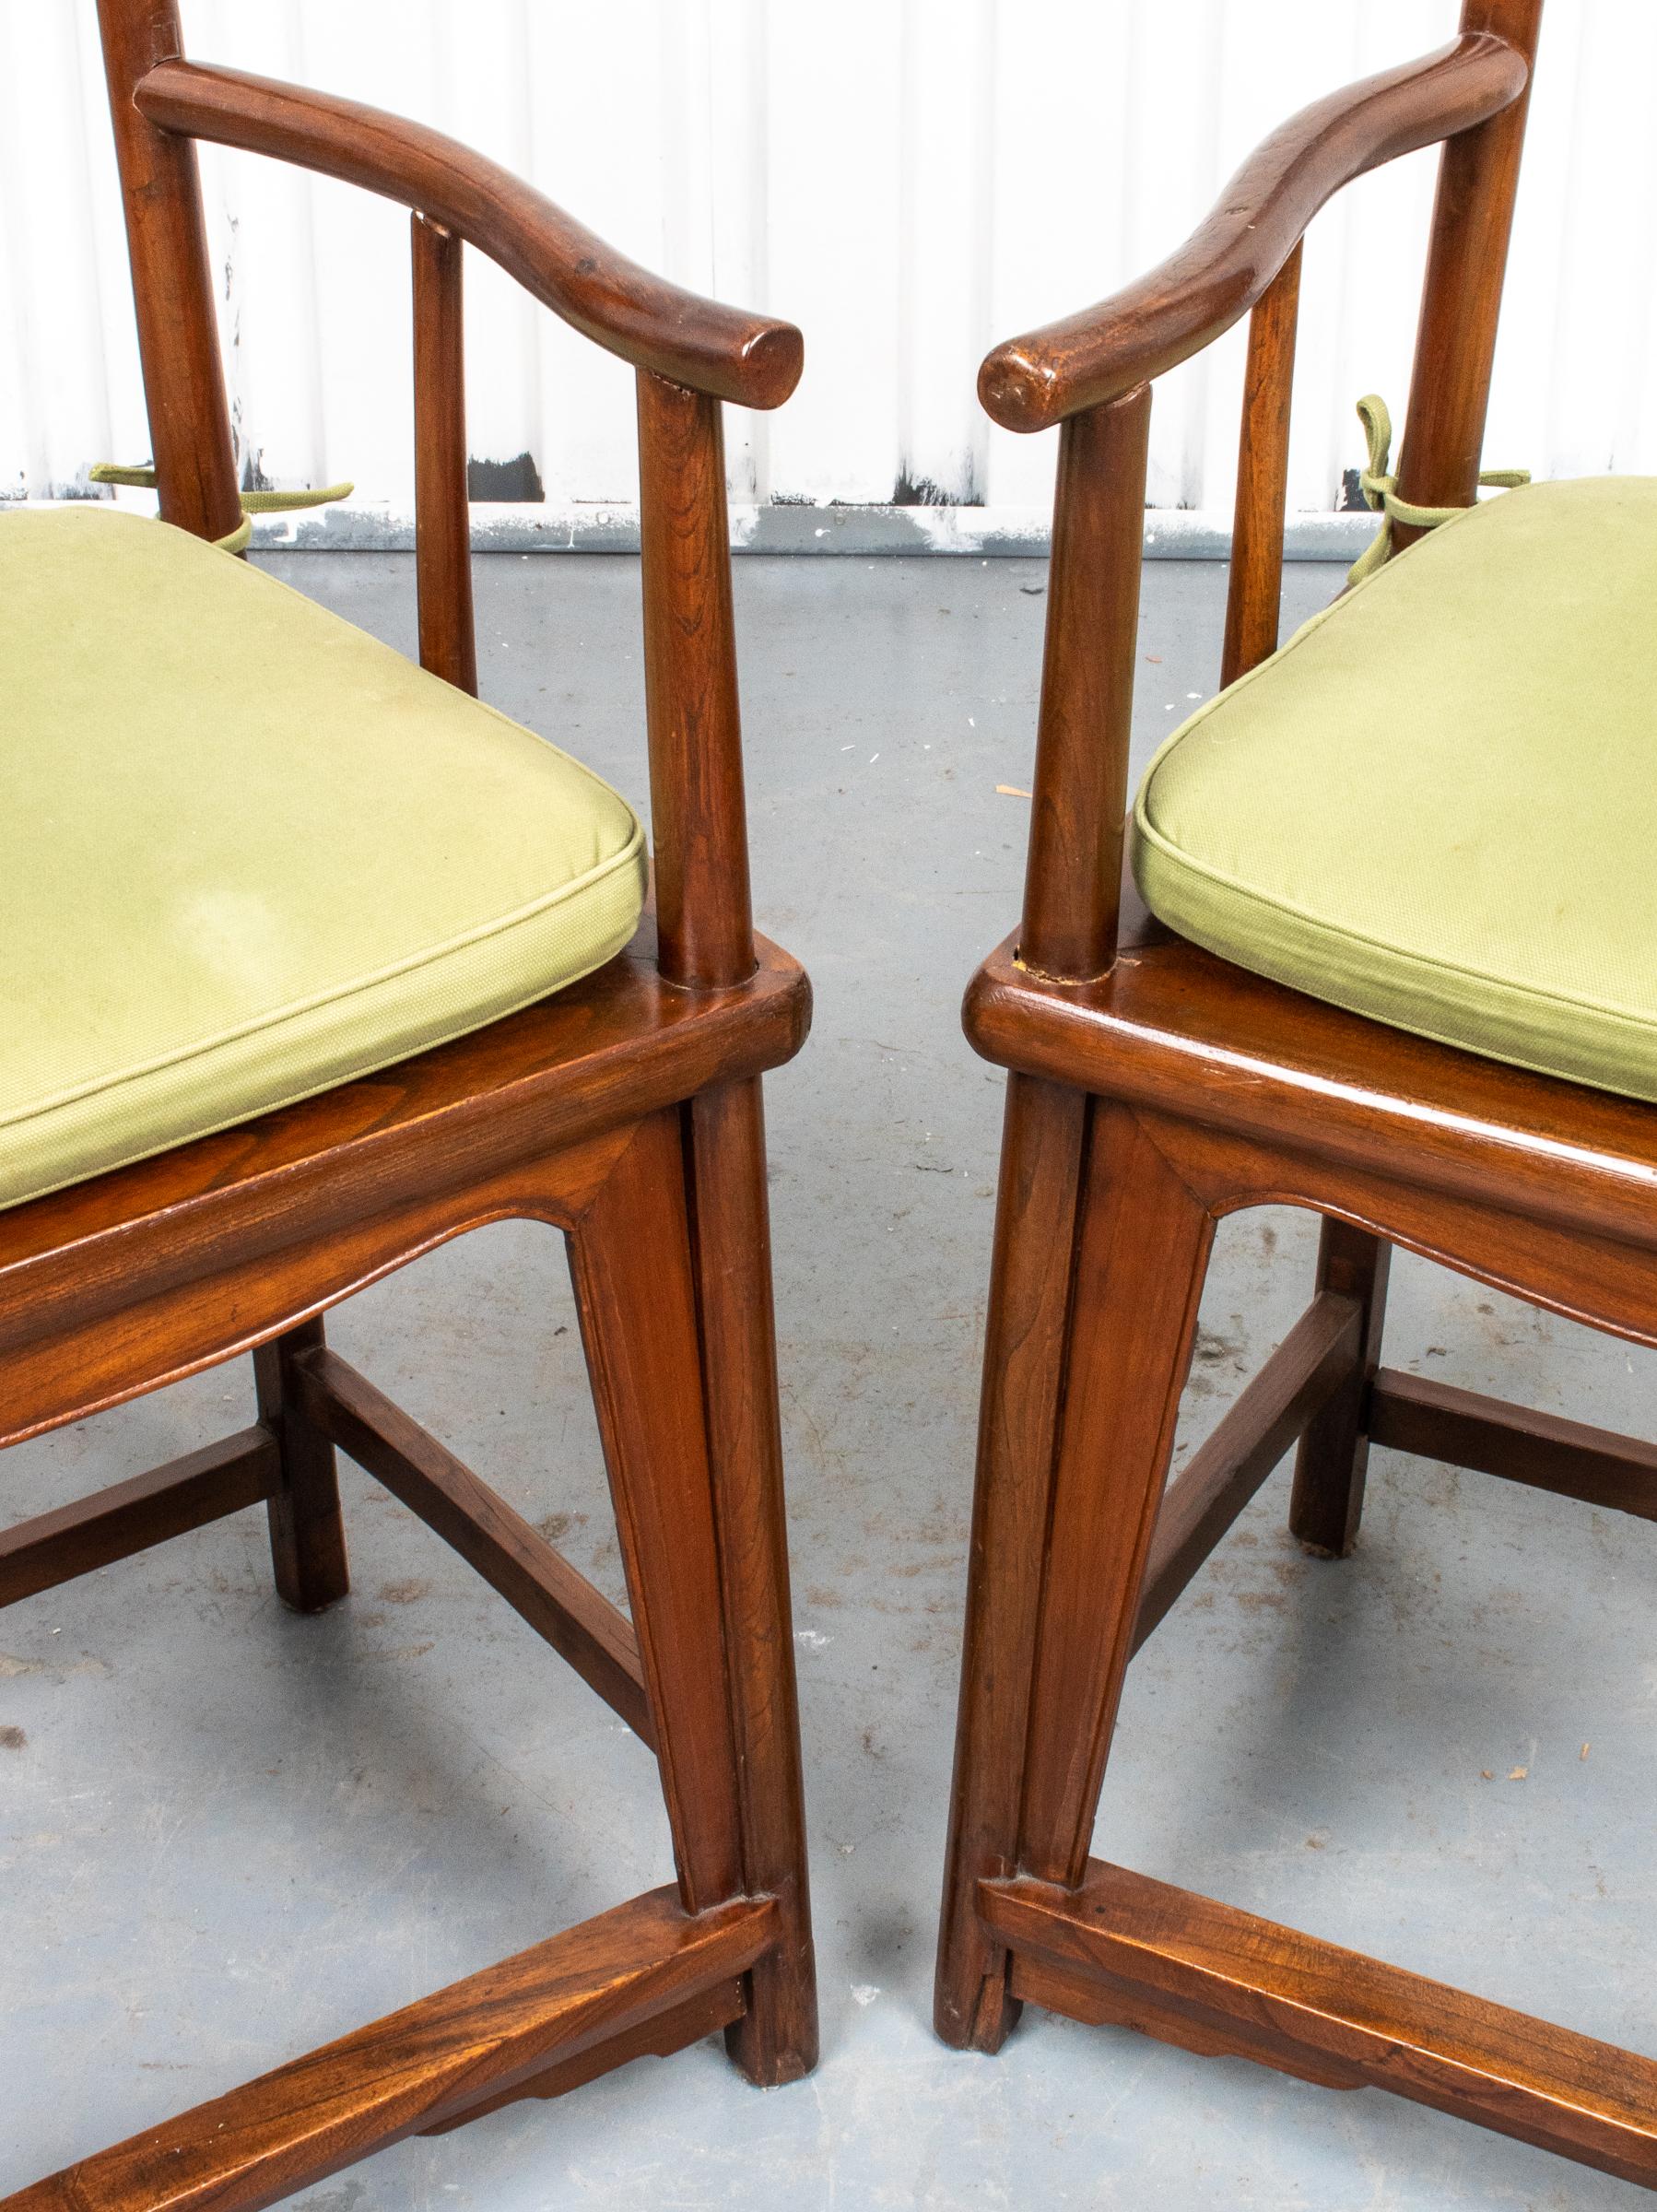 Chinese Export Chinese Hardwood Yoke Back Scholar's Chairs